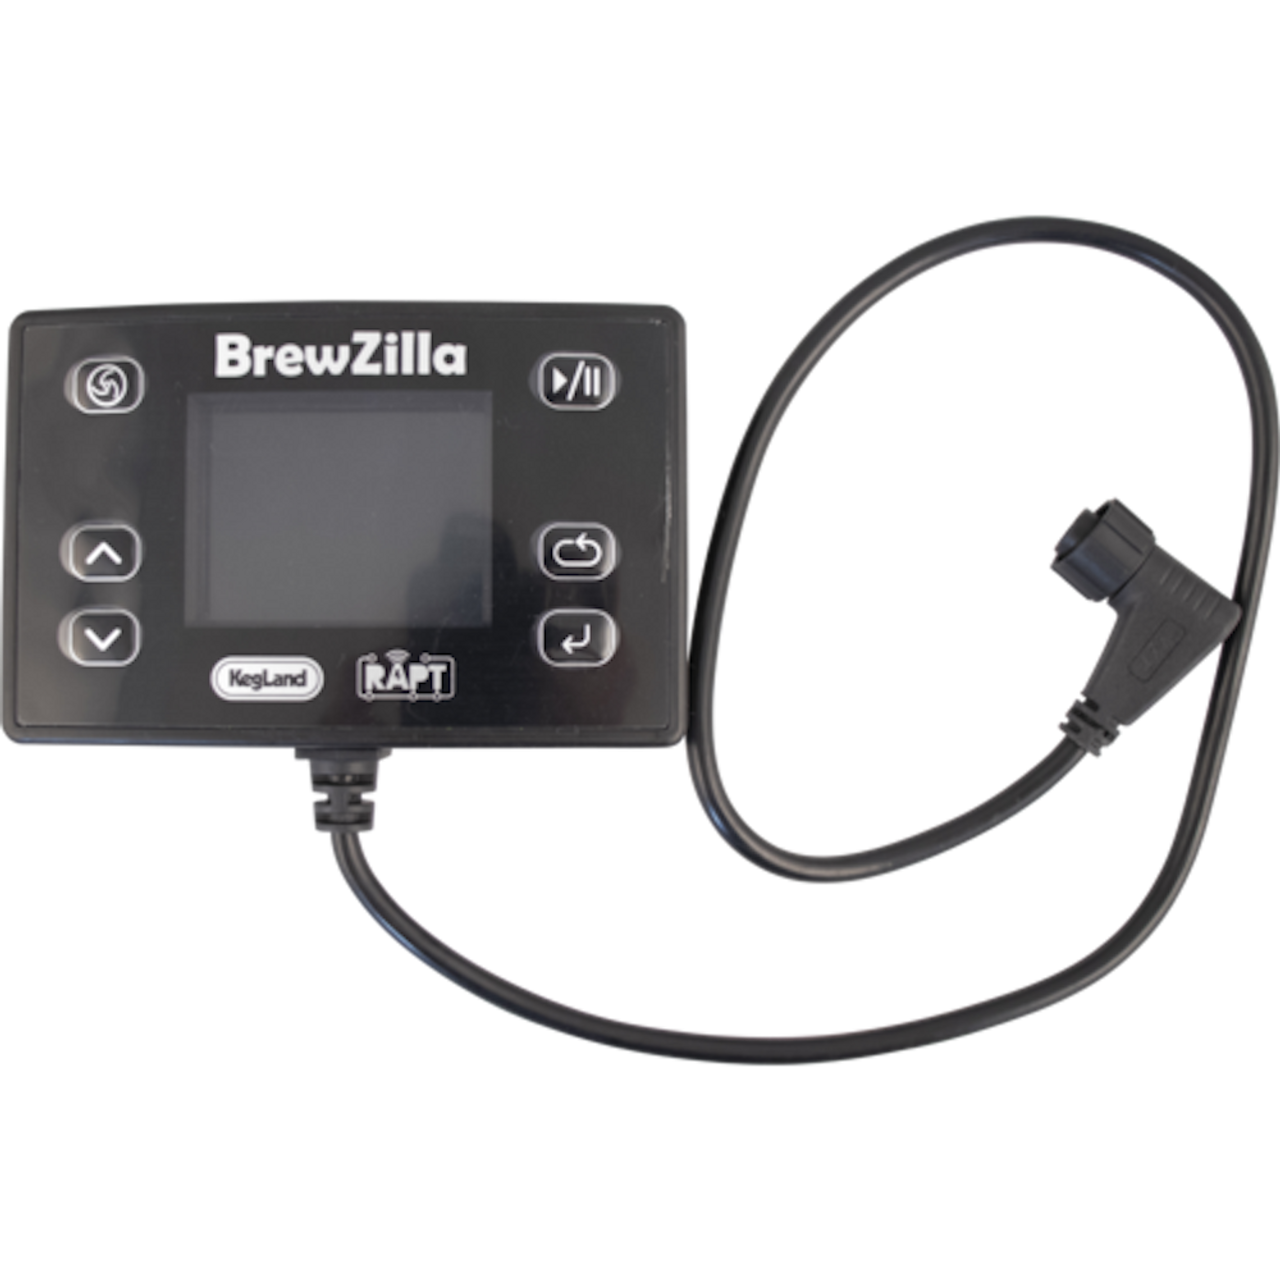 BrewZilla Gen 4 All Grain Brewing System with Wifi/Bluetooth Rapt Controller, Pump - 35L/9.25G - 120V